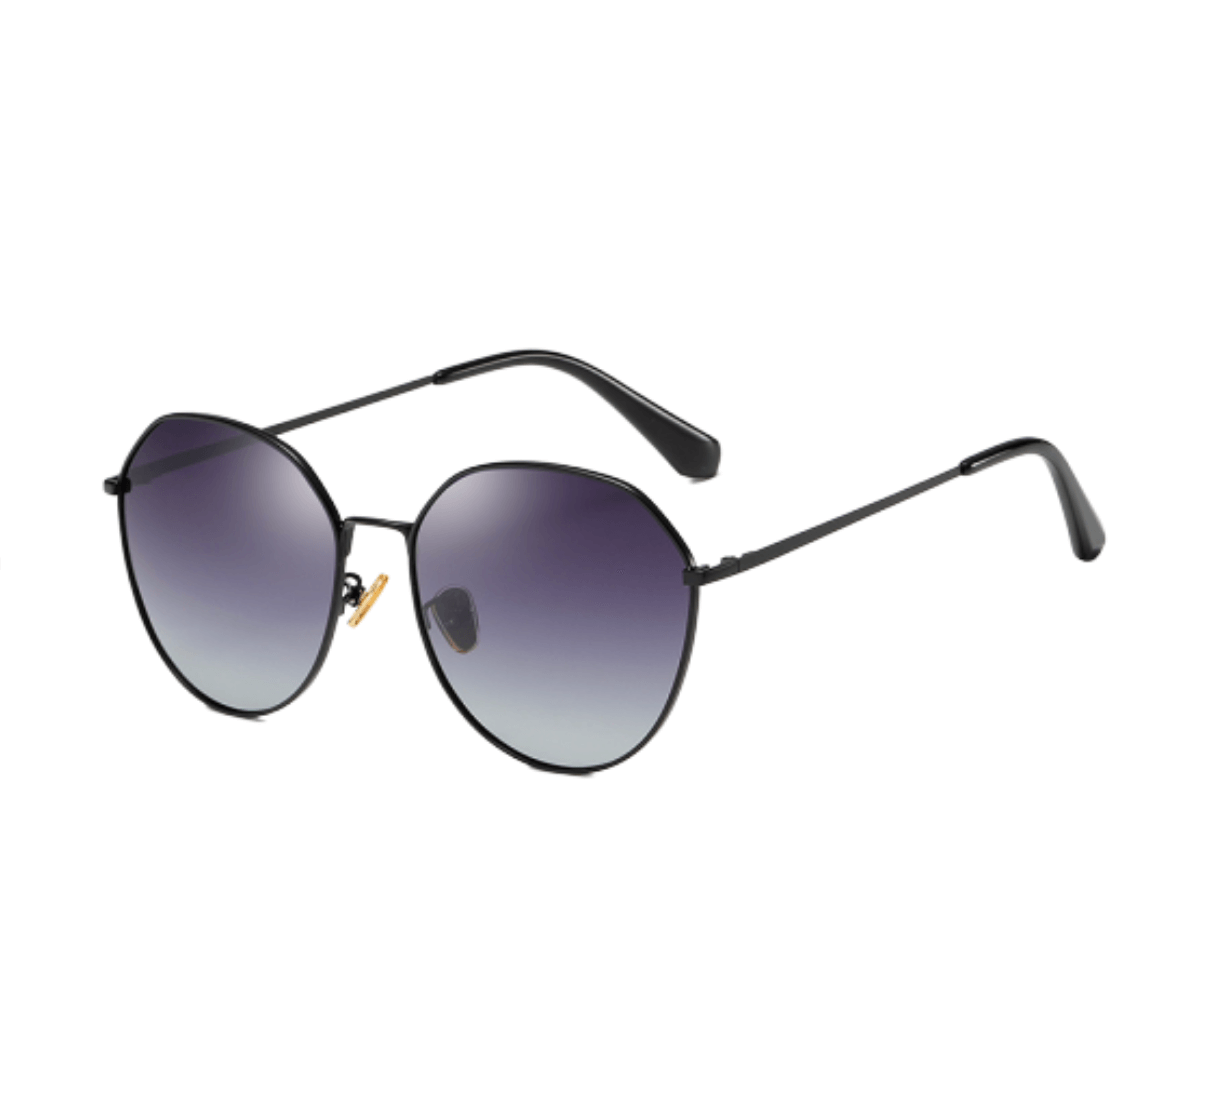 Wholesale Womens Sunglasses, wholesale retro sunglasses, wholesale vintage sunglasses, Sunglasses Manufacturer